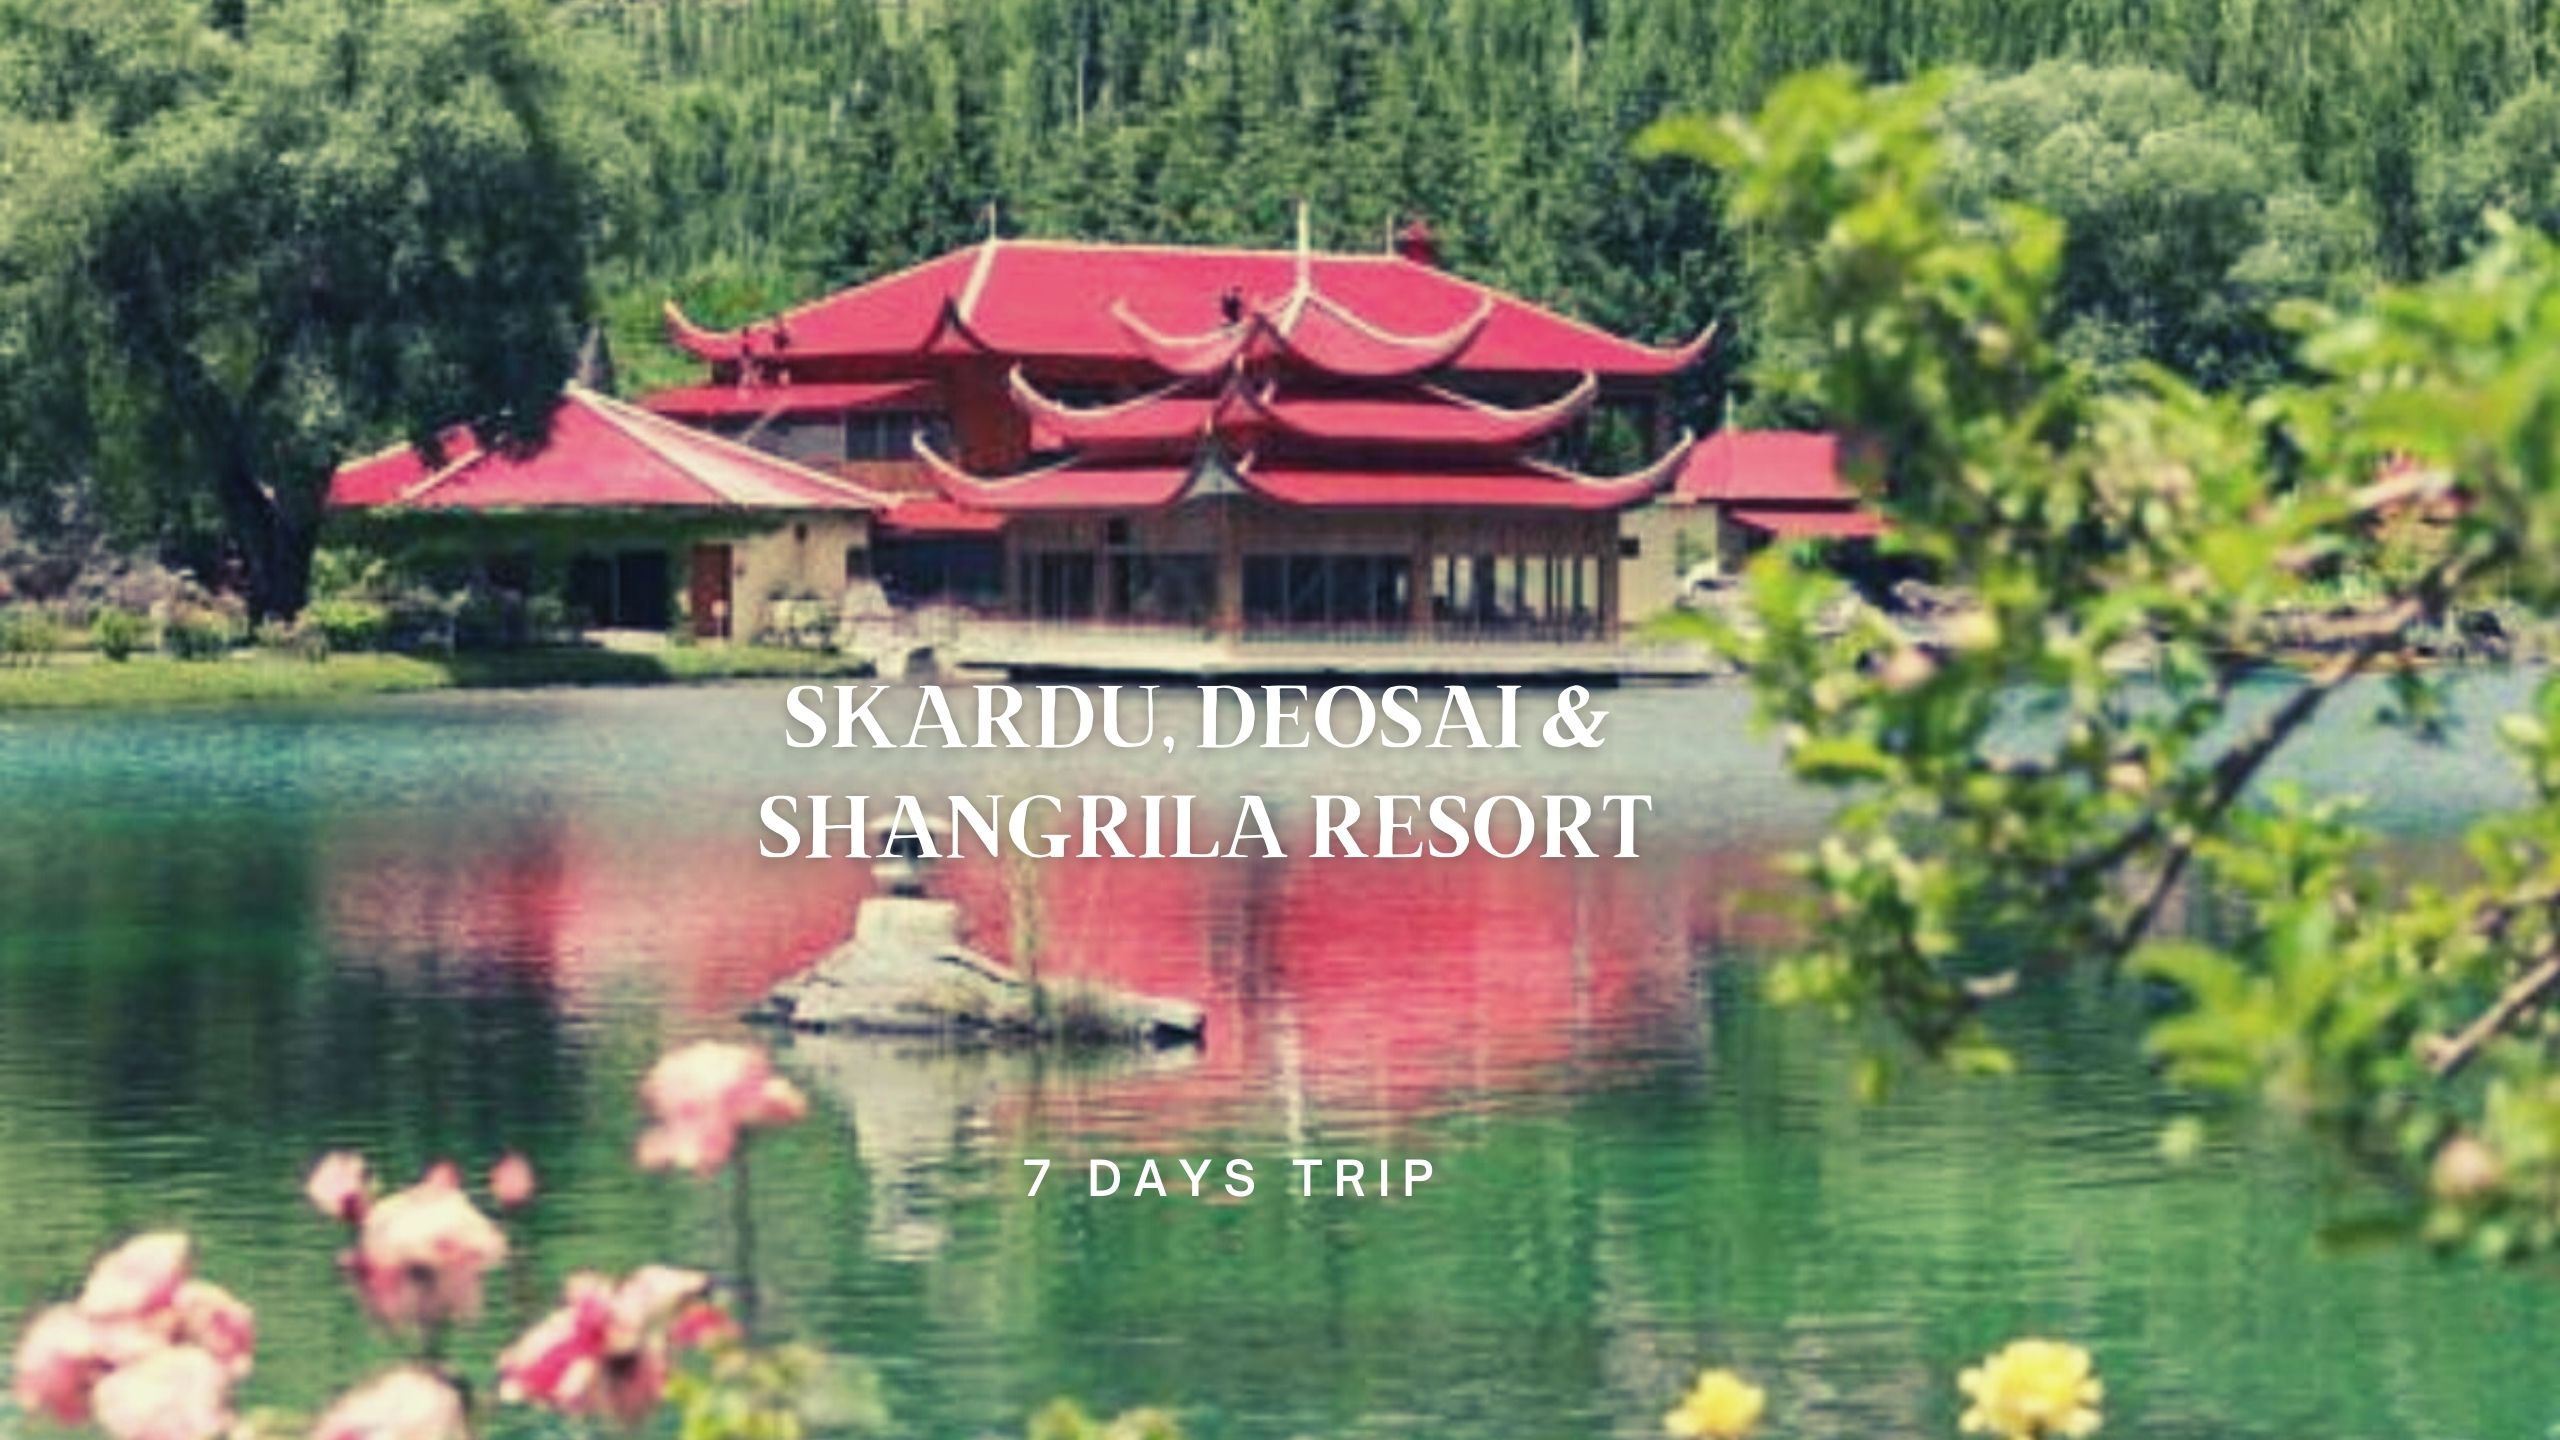 7 Days Trip to Skardu, Deosai & Shangrila Resort